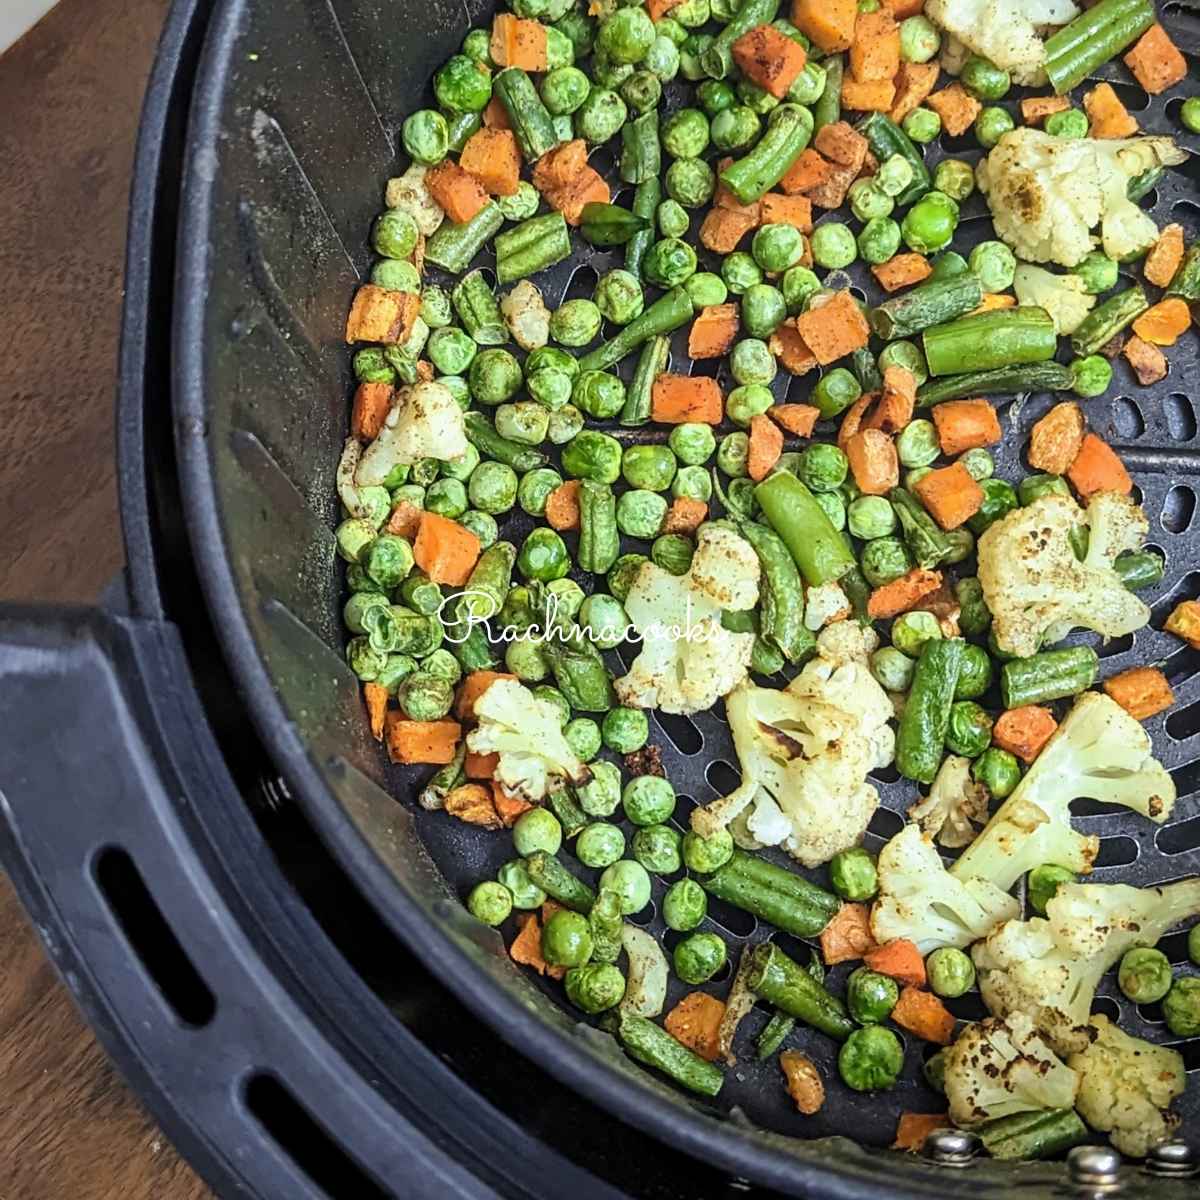 Roasted vegetables in air fryer basket after air frying